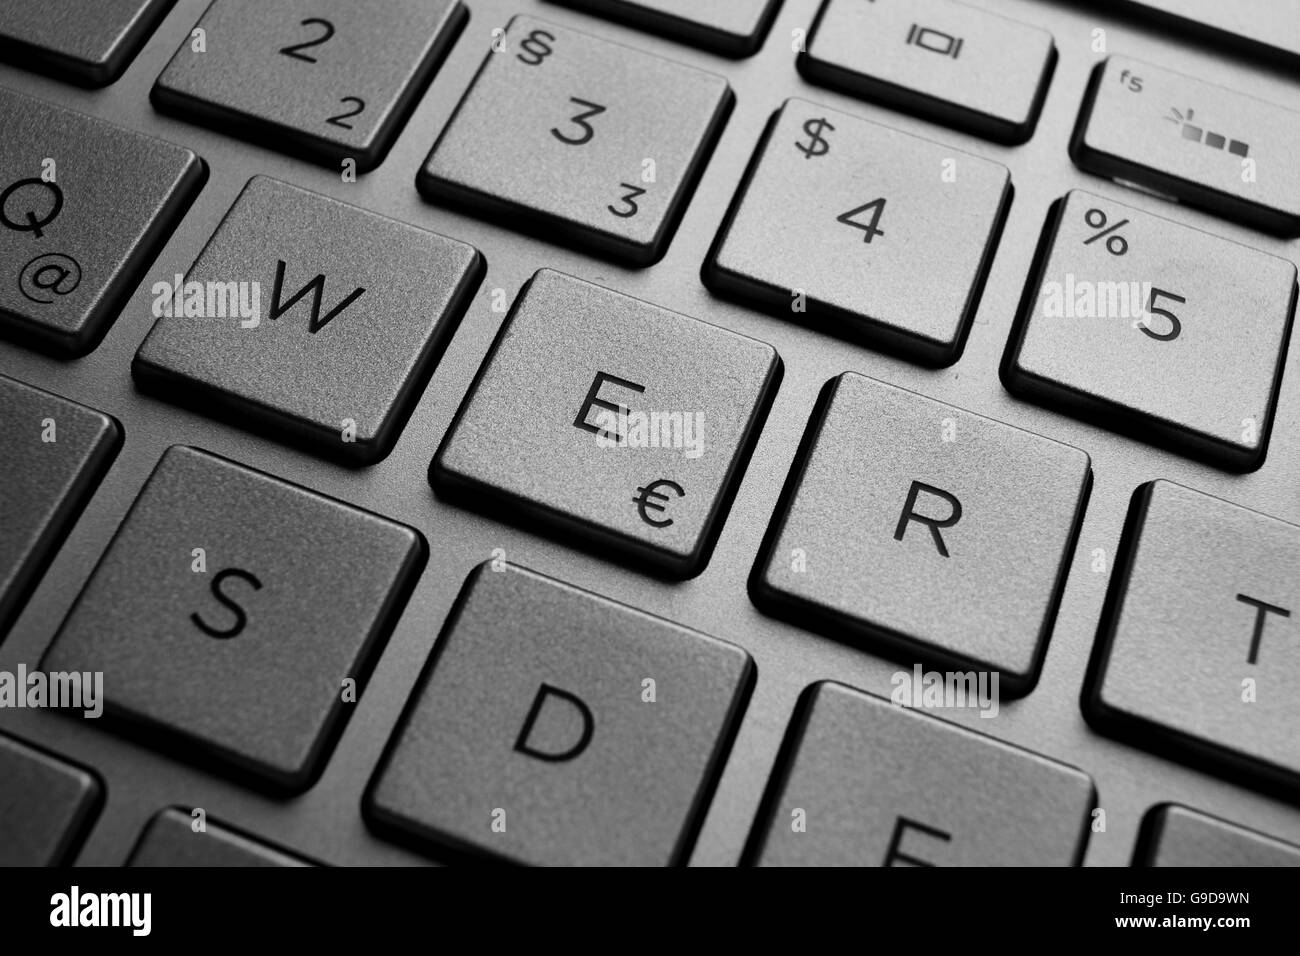 Argento tedesco notebook tastiera QWERTZ Foto stock - Alamy